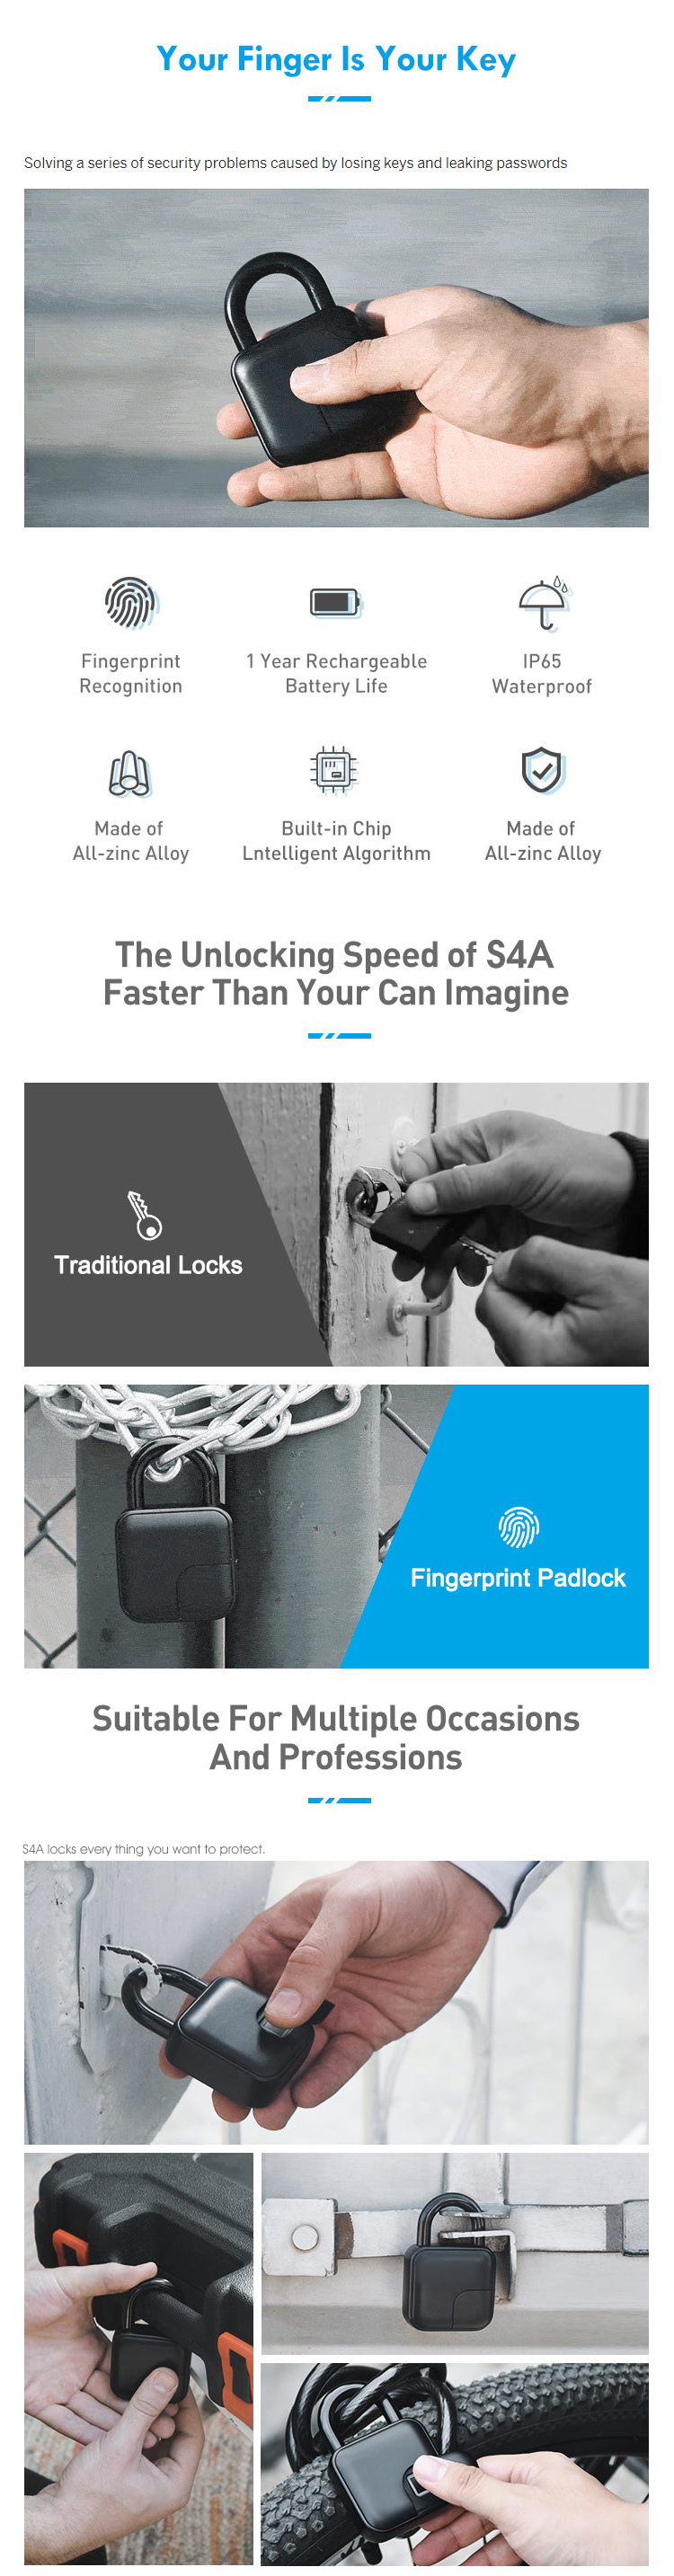 Biometric Fingerprint Padlock